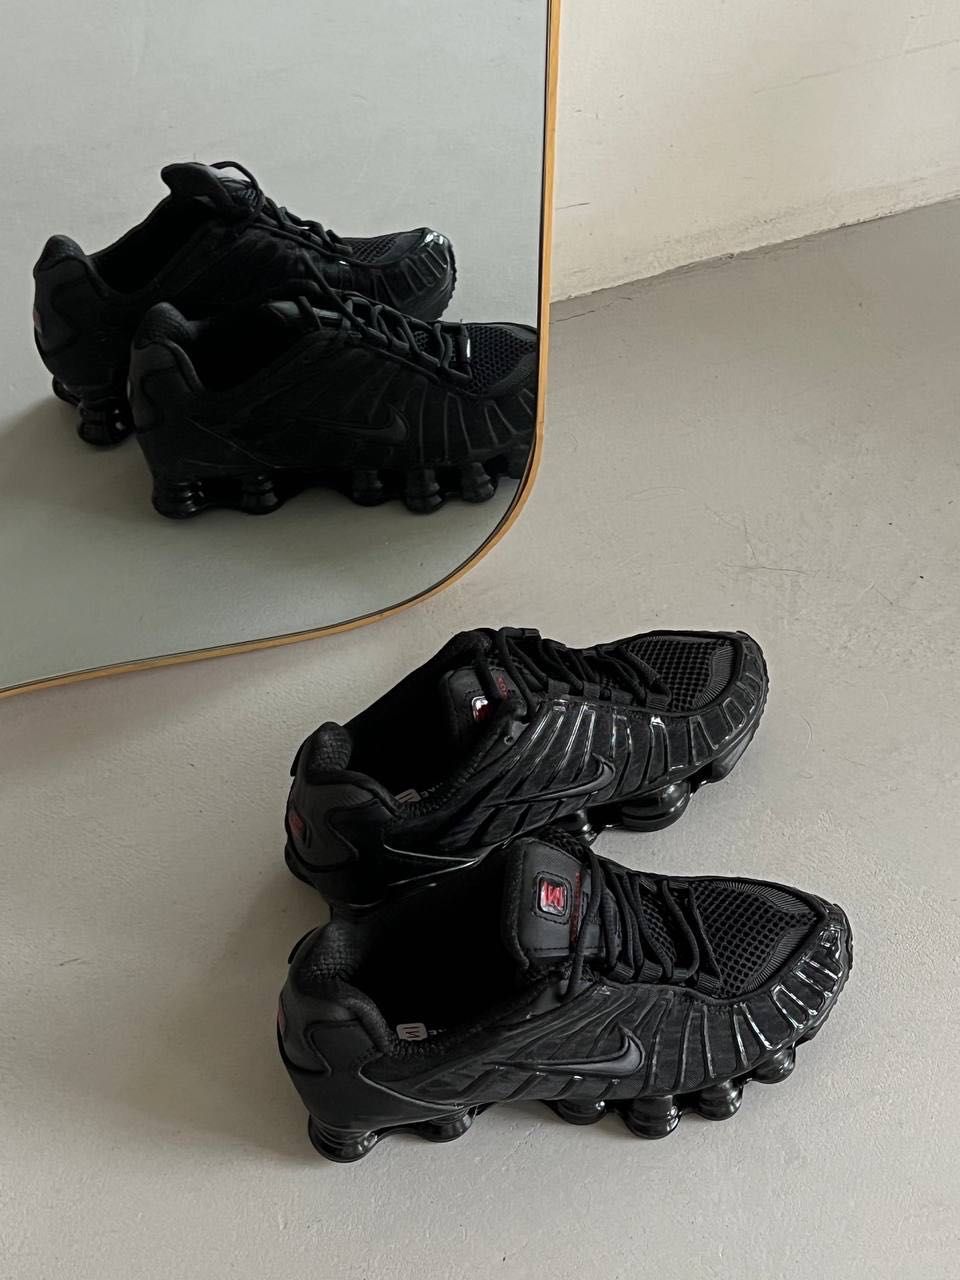 Мужские кроссовки Nike Shox TL Black. Размеры 40-45